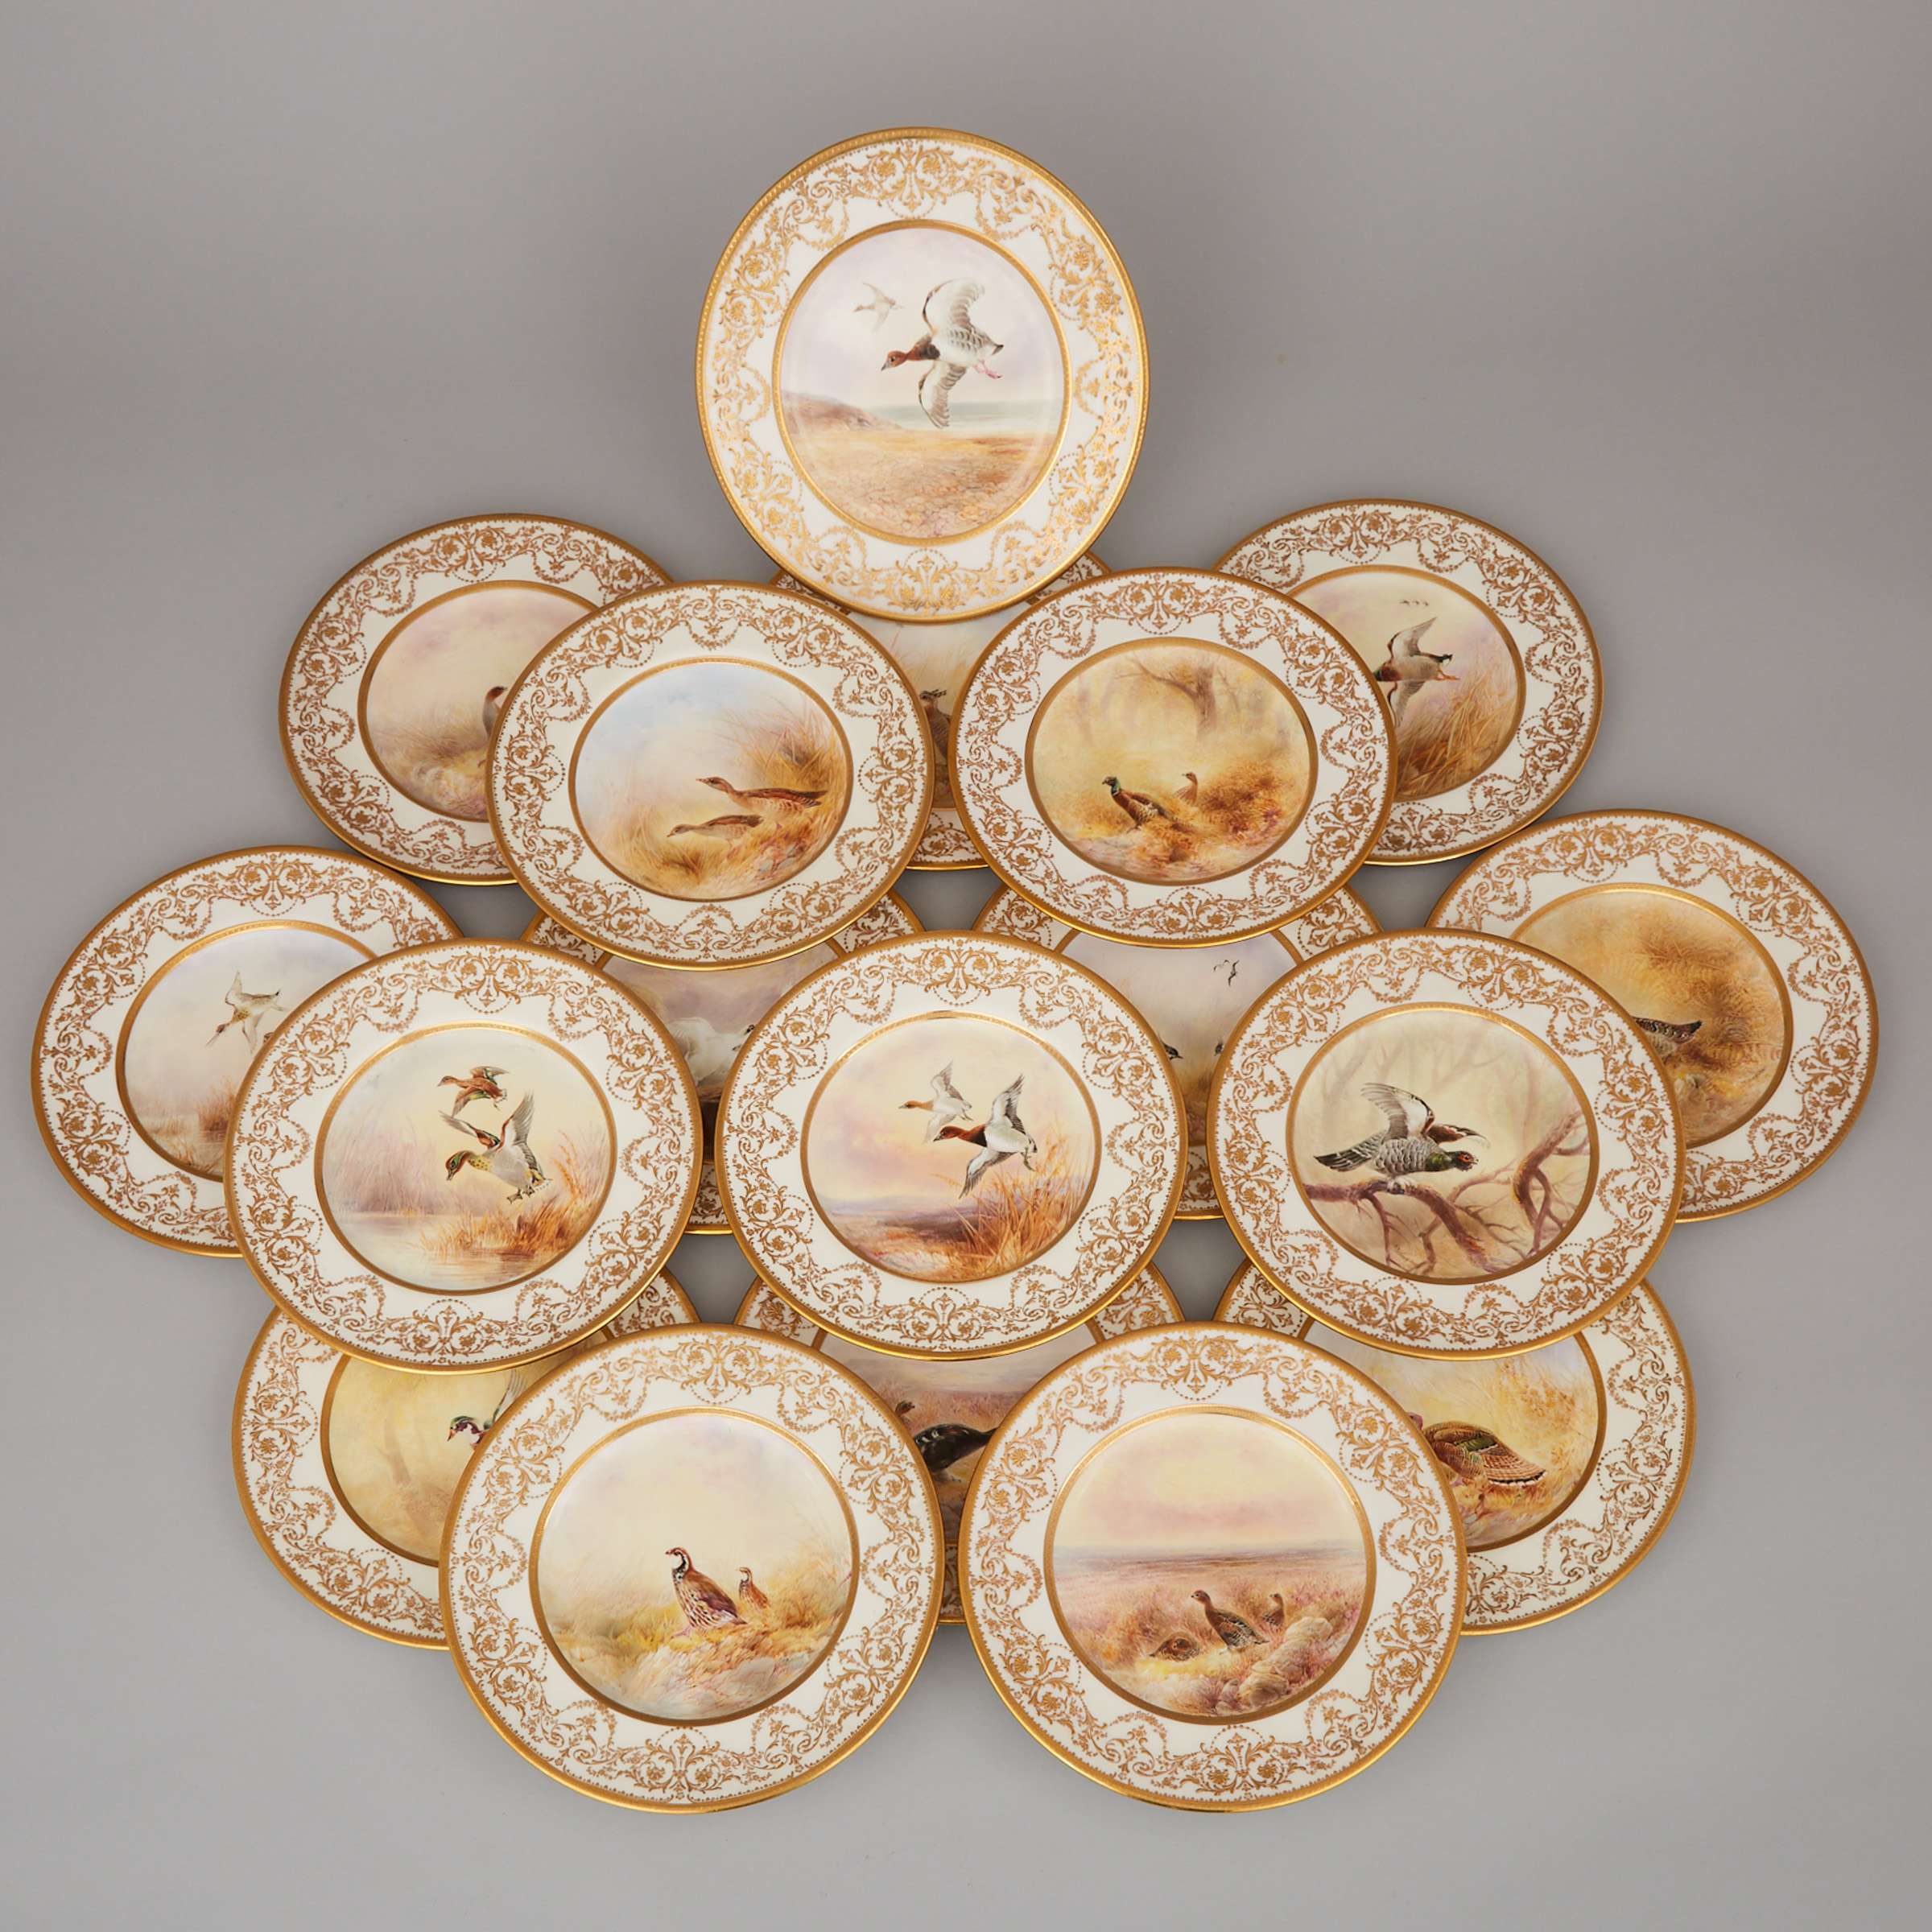 Set of Eighteen Royal Doulton Game Plates, Joseph Birbeck Sr., c.1918-22